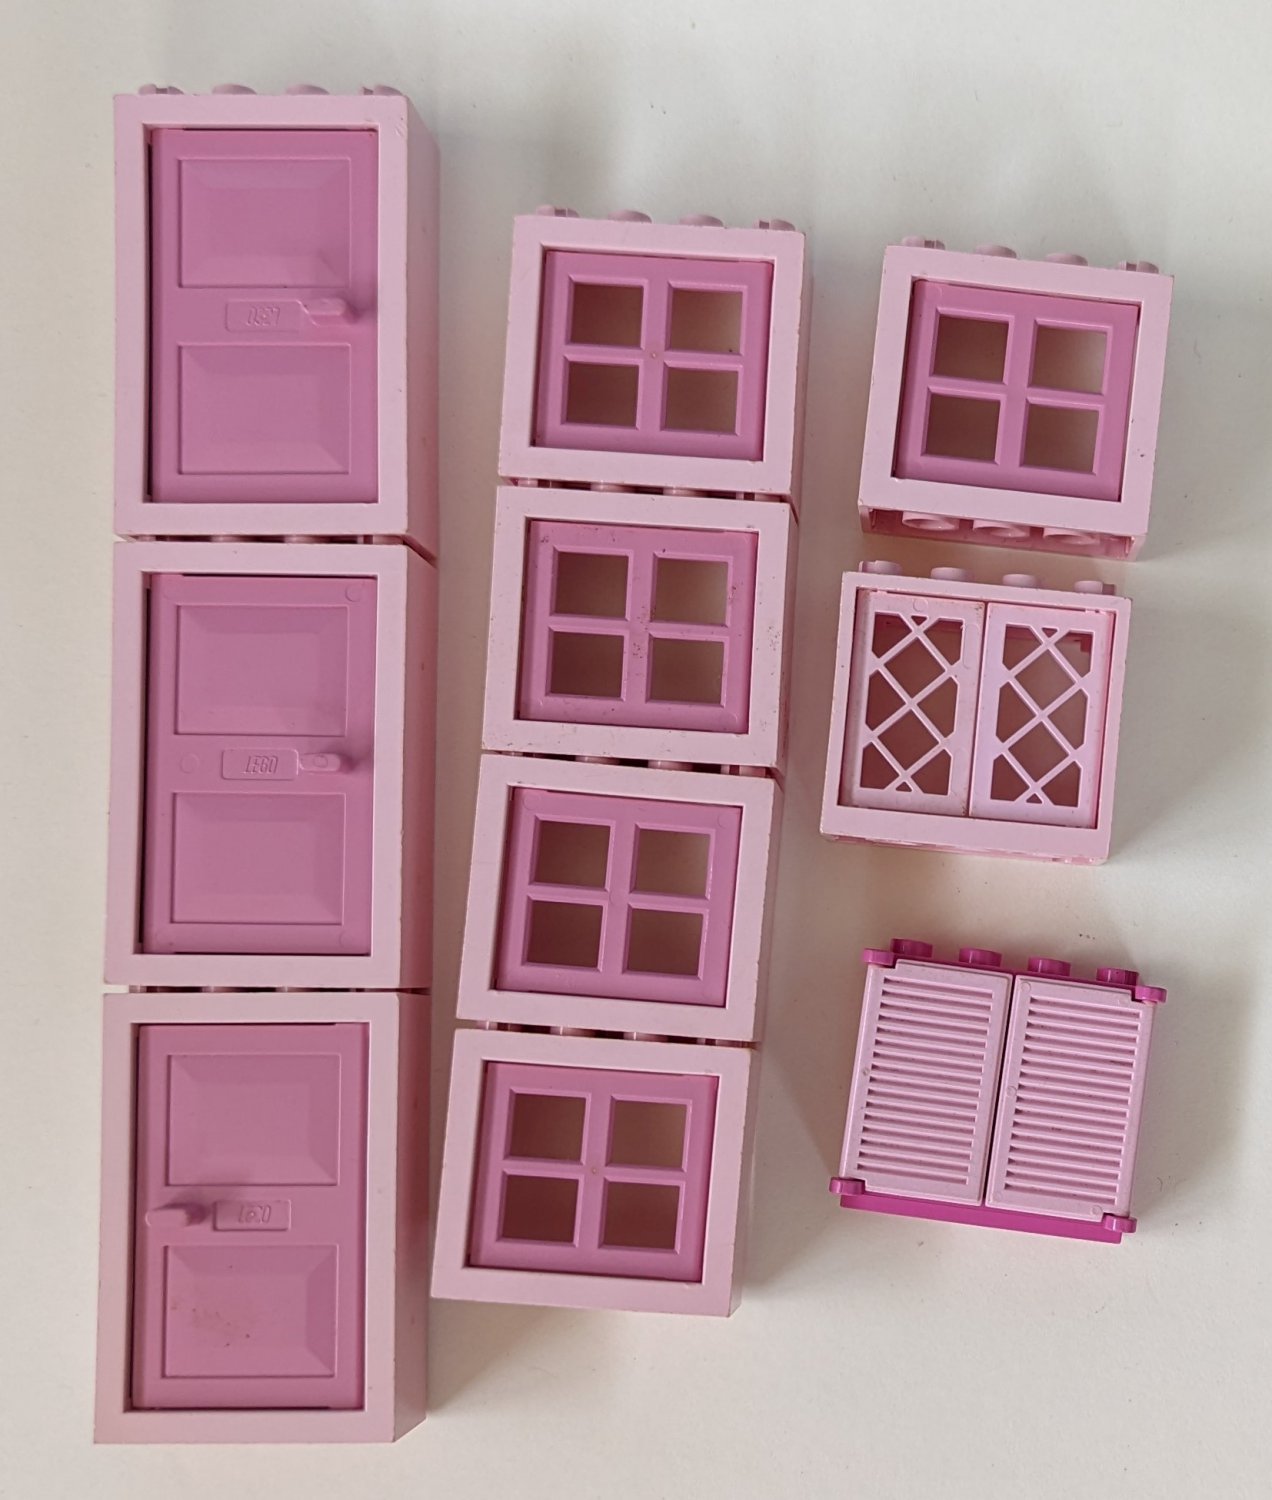 Lego Pink Windows Doors Shutters Lot